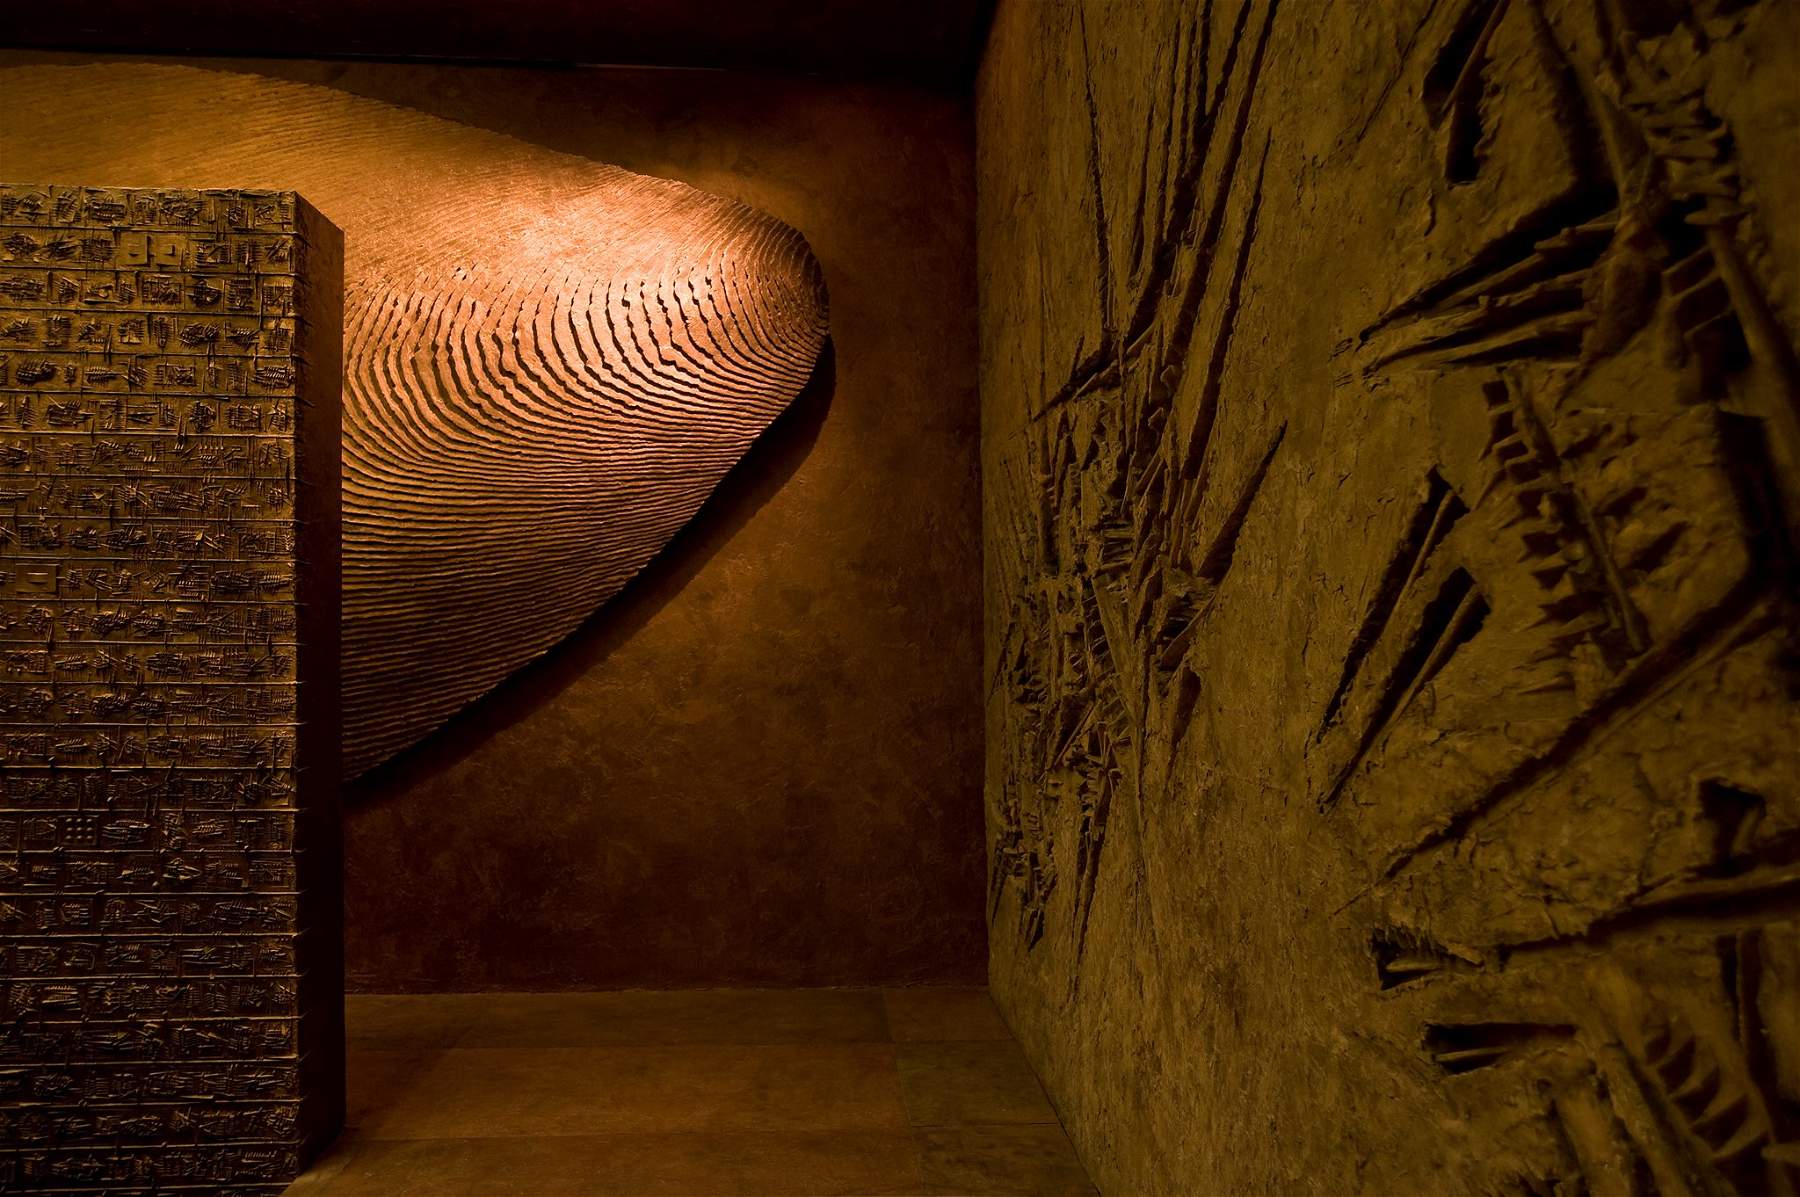 Arnaldo Pomodoro's Labyrinth: a journey through history and the human psyche